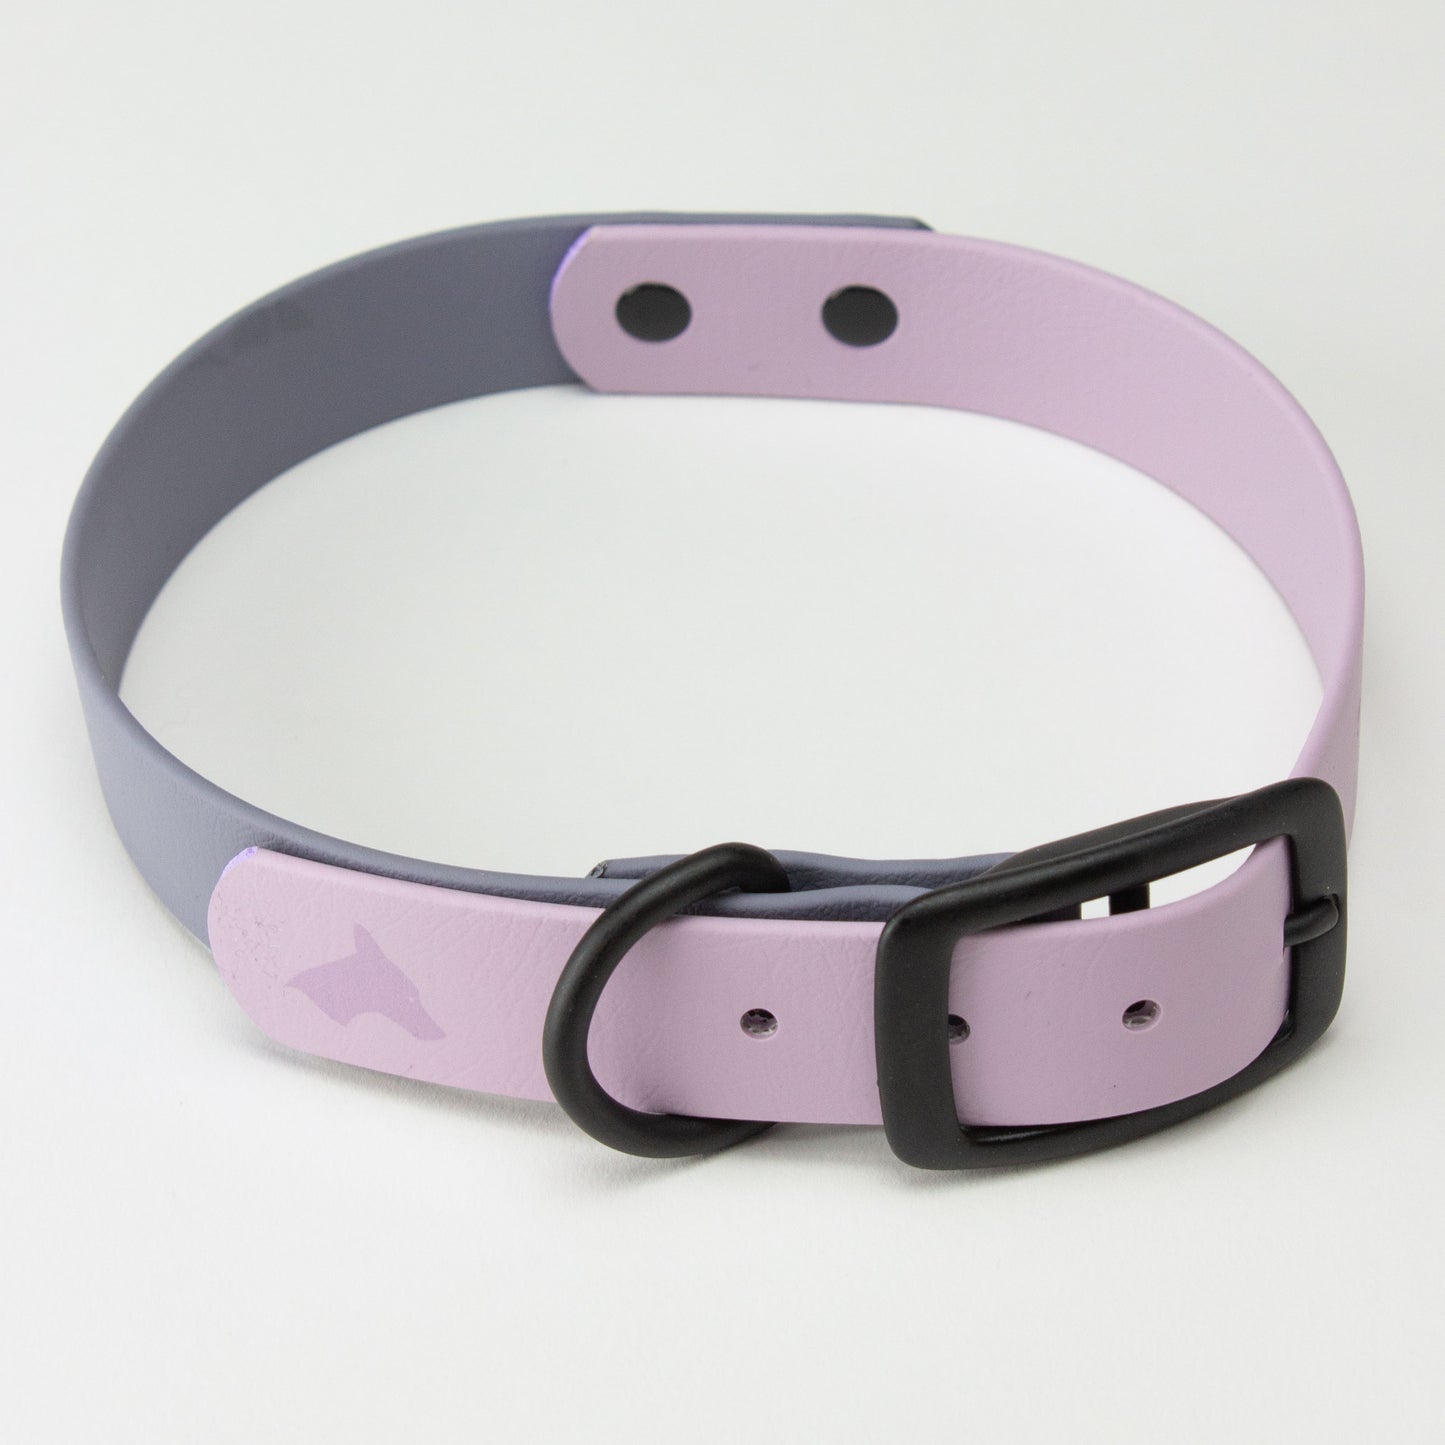 Dual-Tone BioThane Dog Collar in Gray & Violet